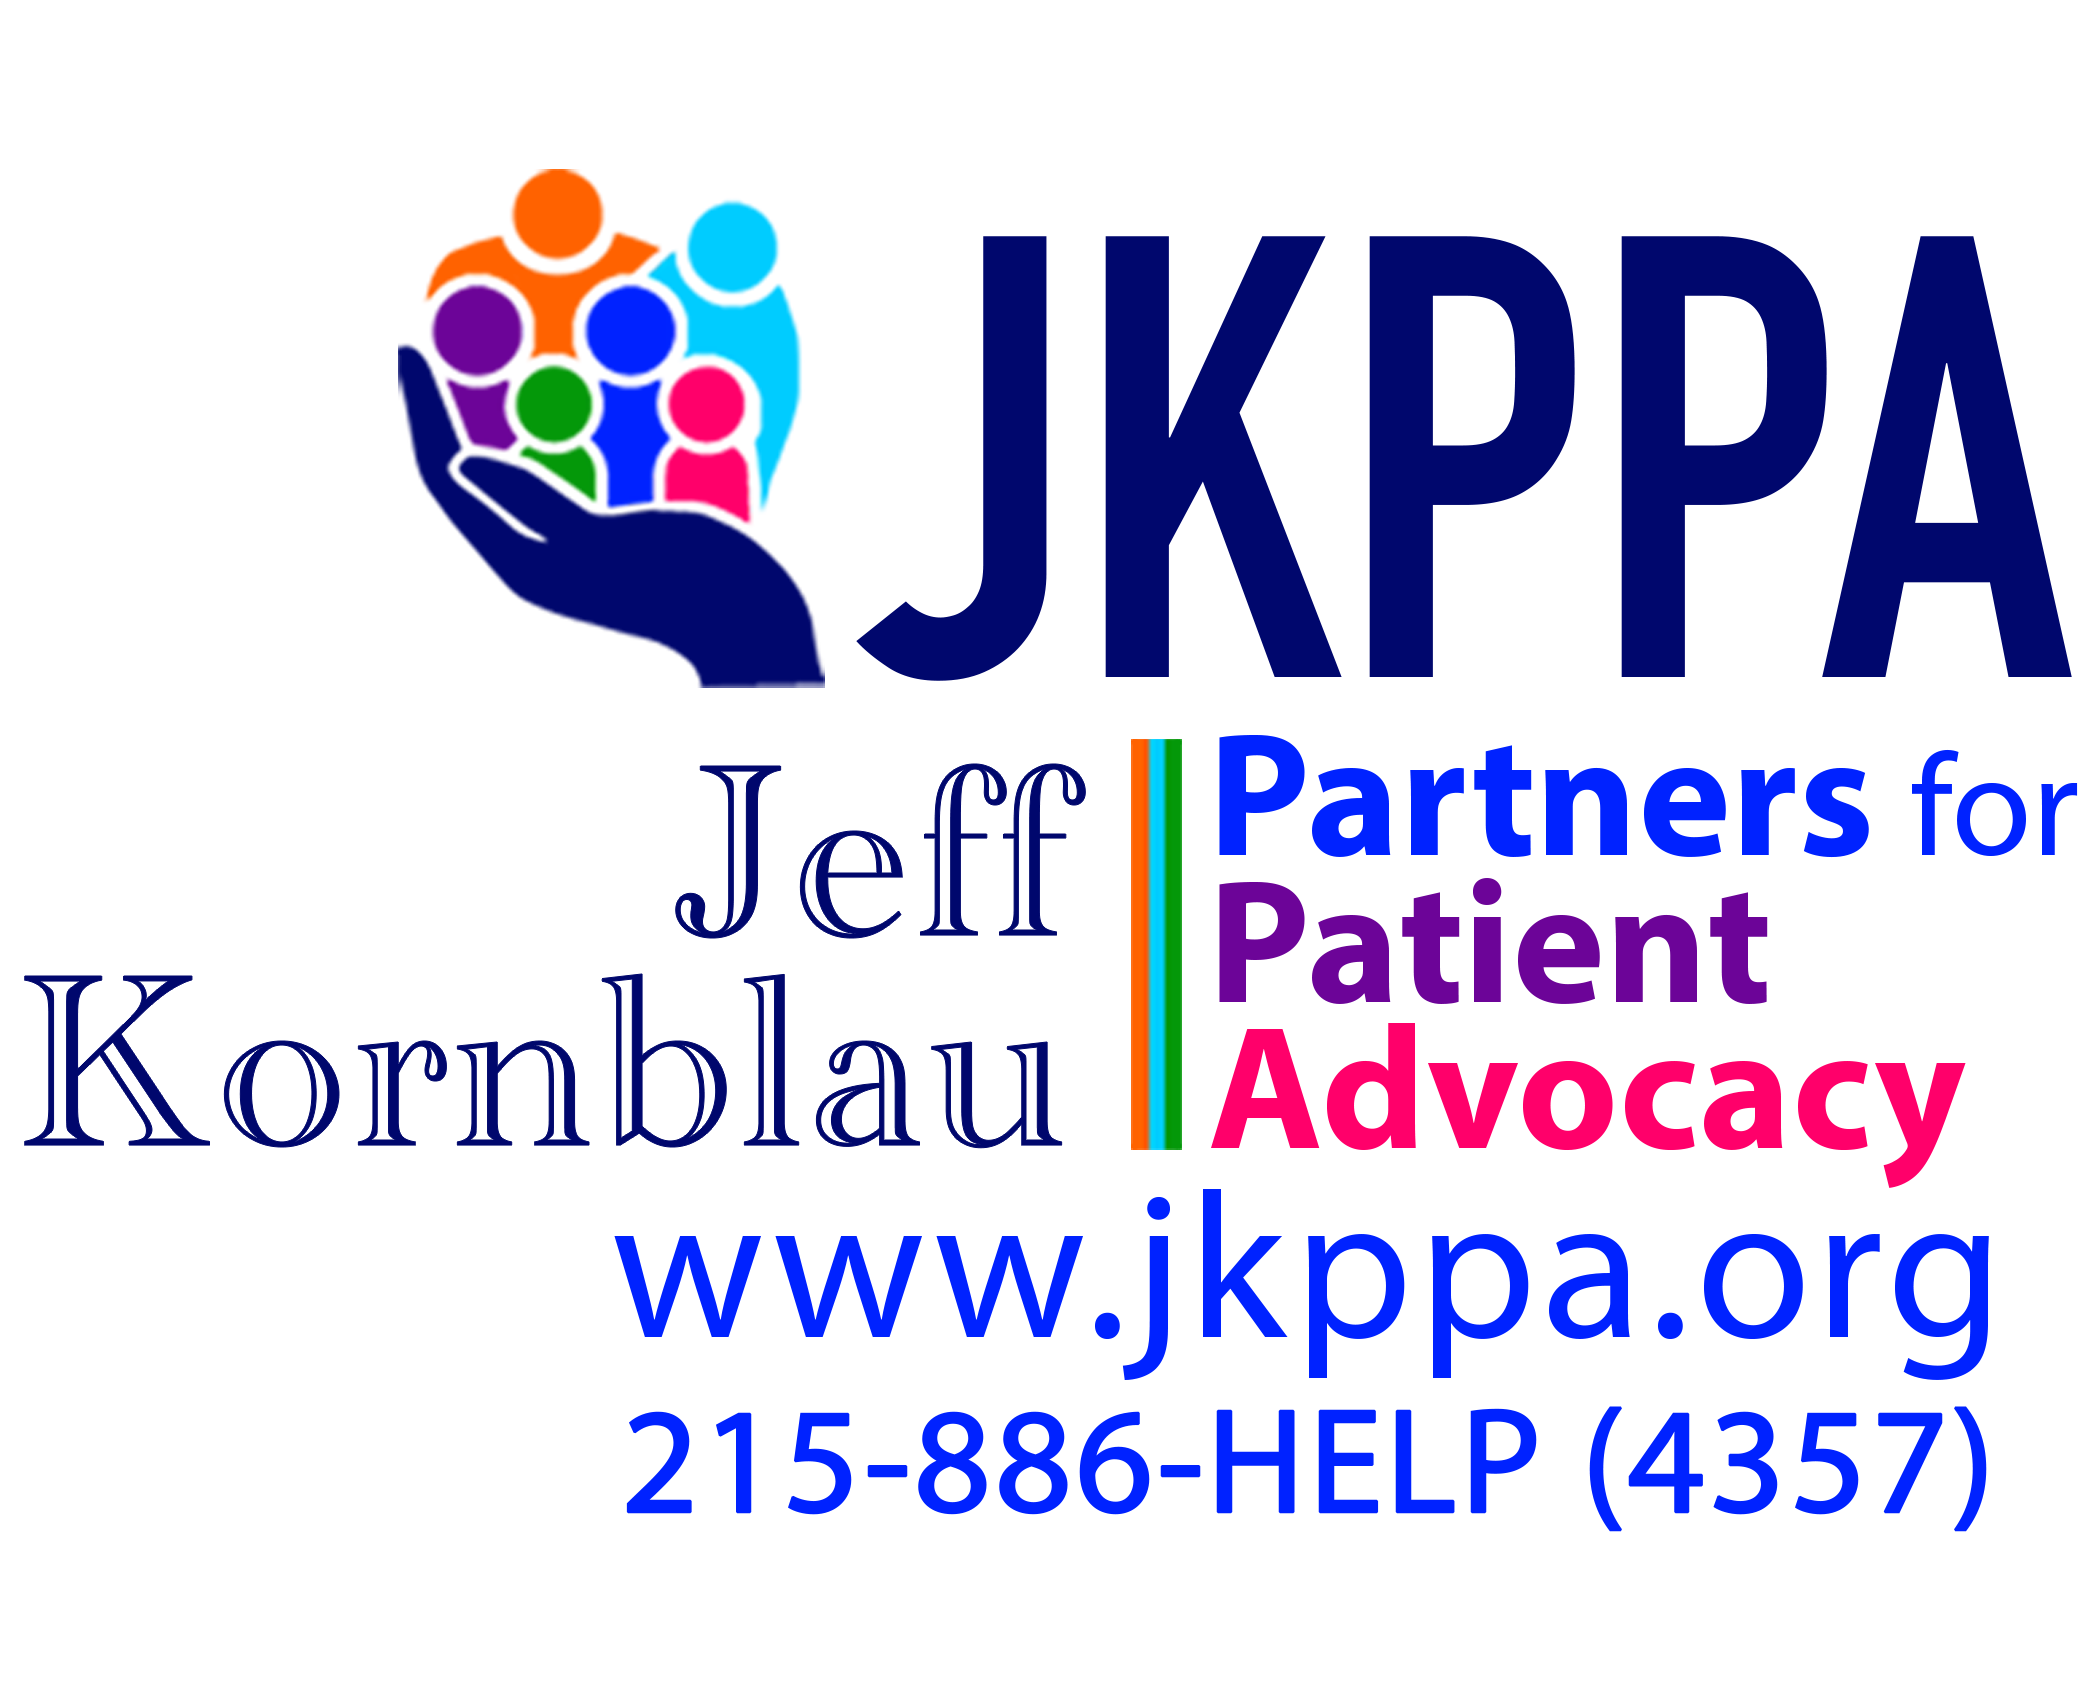 Jeff Kornblau Partners for Patient Advocacy logo